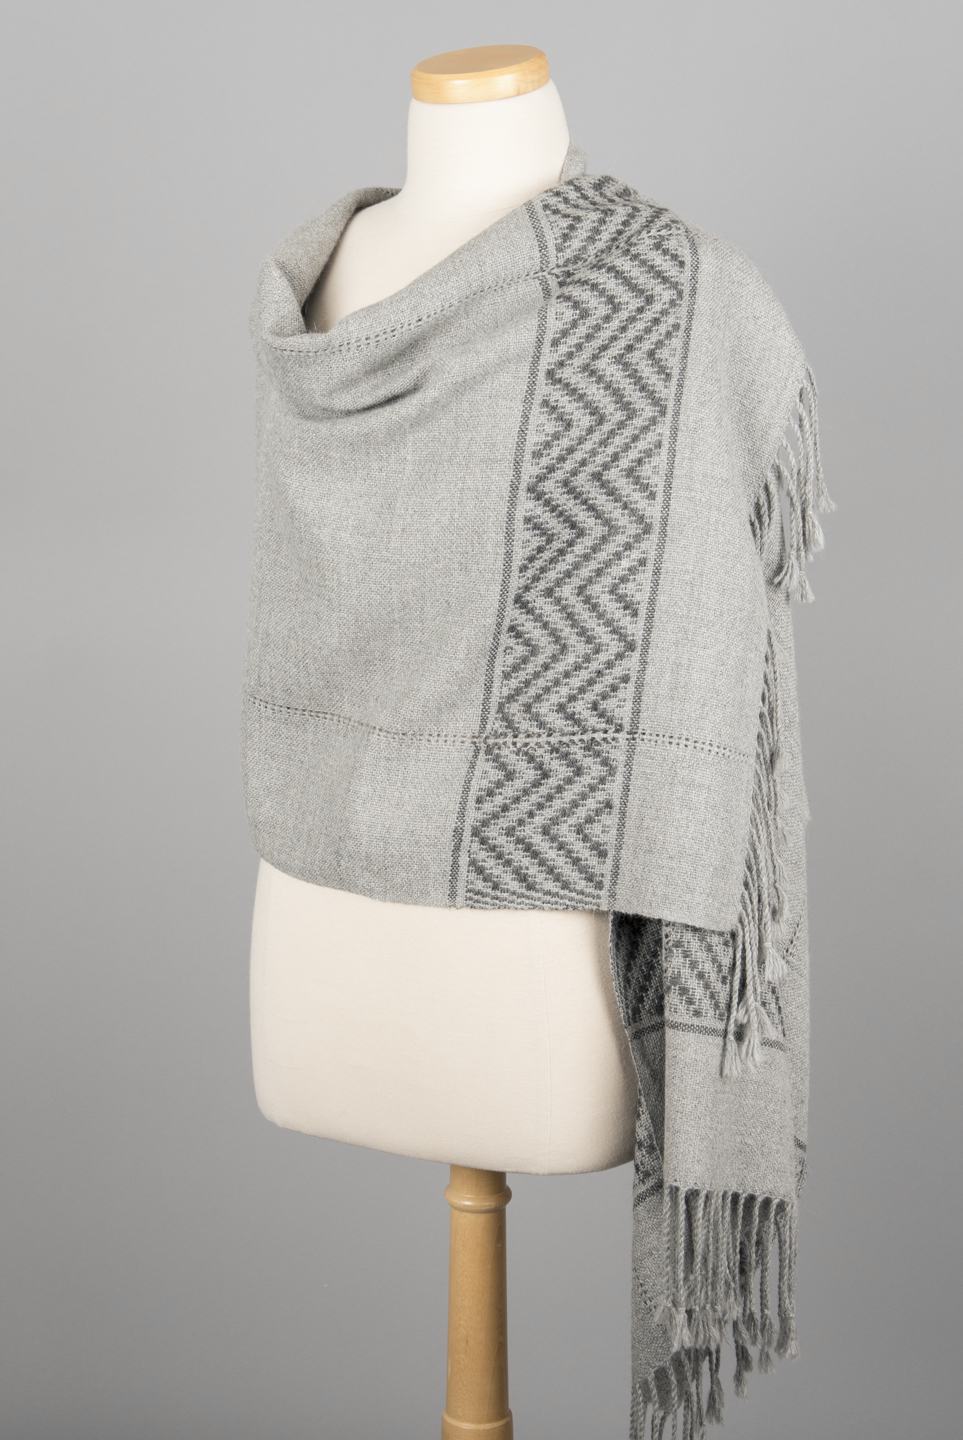 châle tissé / woven shawl